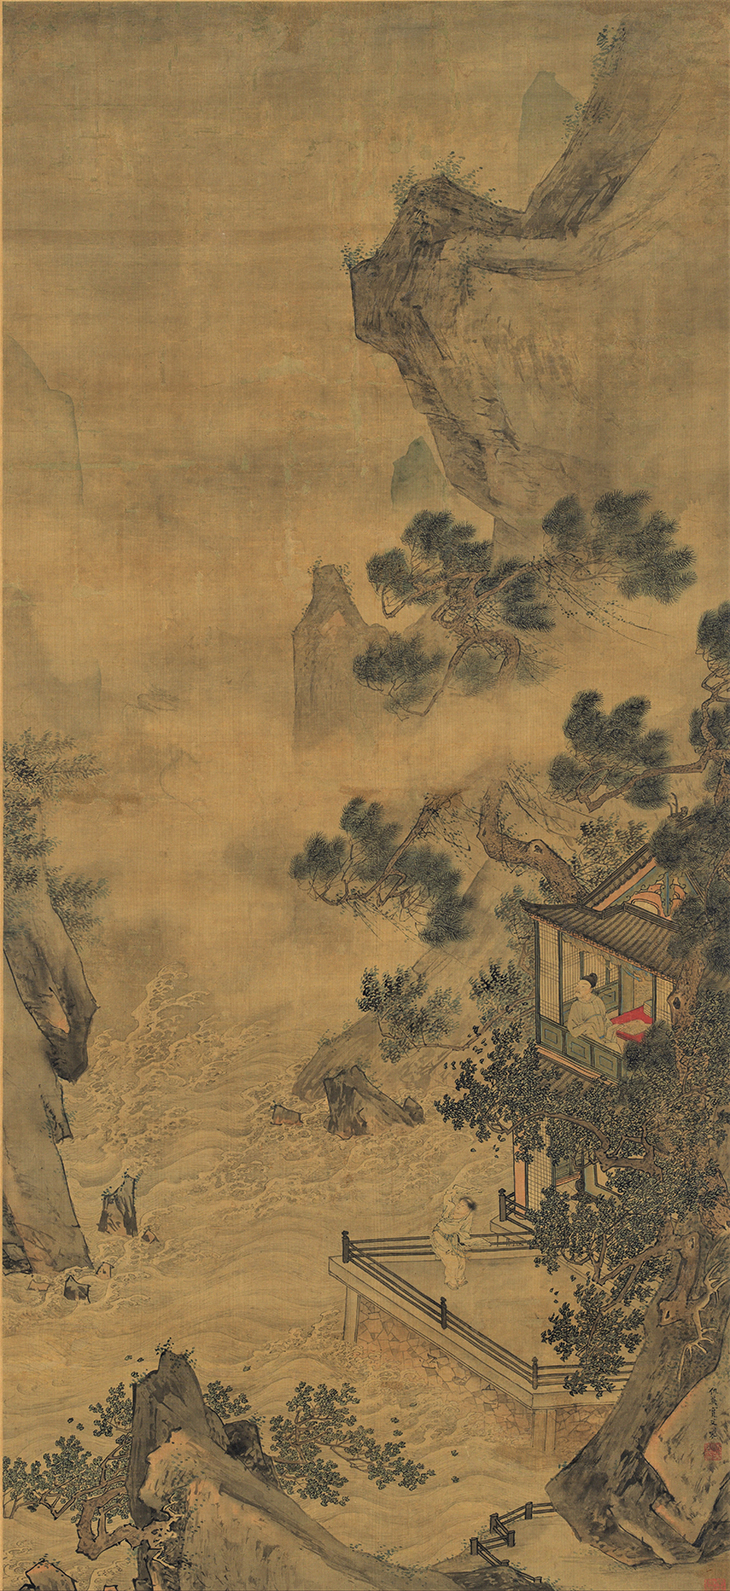 Dragon awakening in the spring (16th century), Qiu Ying.